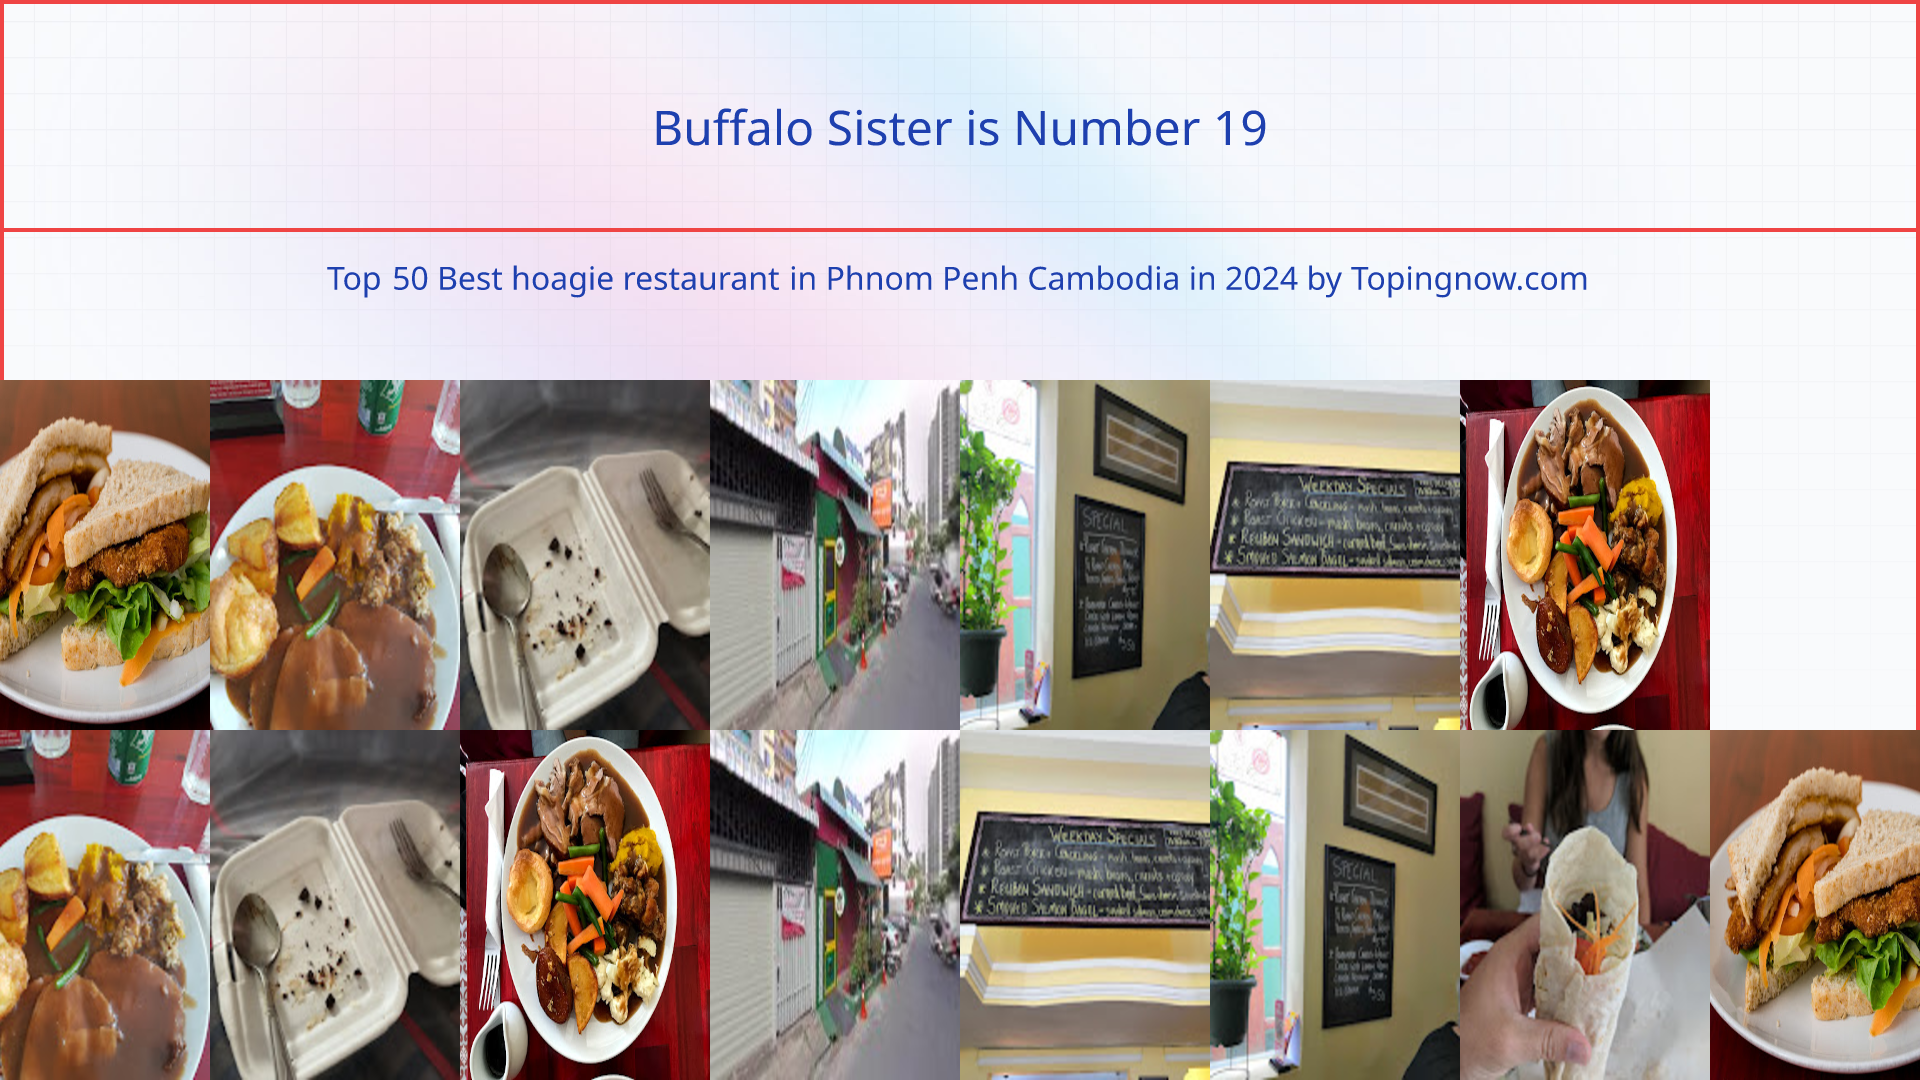 Buffalo Sister: Top 50 Best hoagie restaurant in Phnom Penh Cambodia in 2024